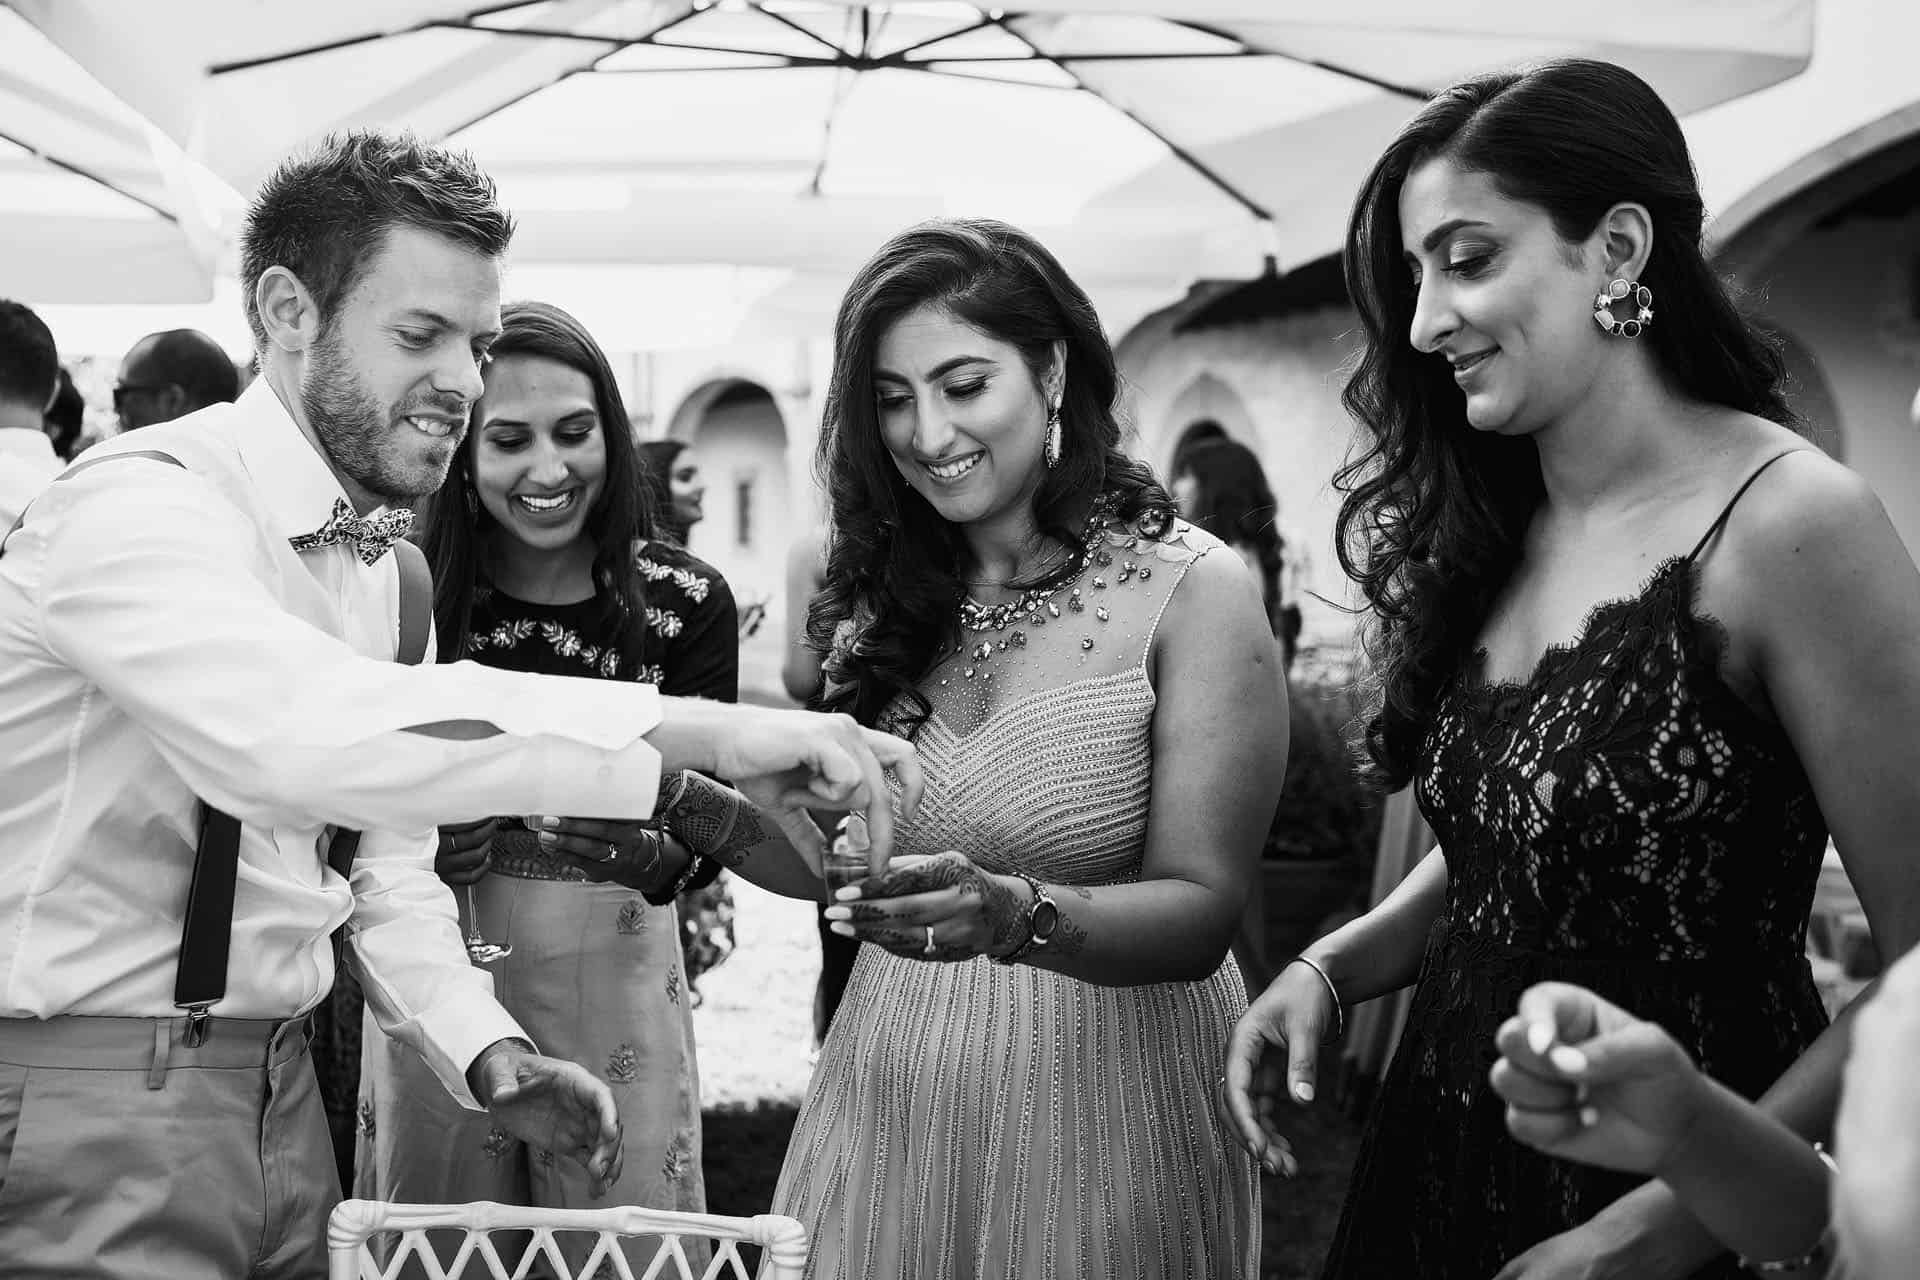 Tenuta di Artimino tuscany indian wedding